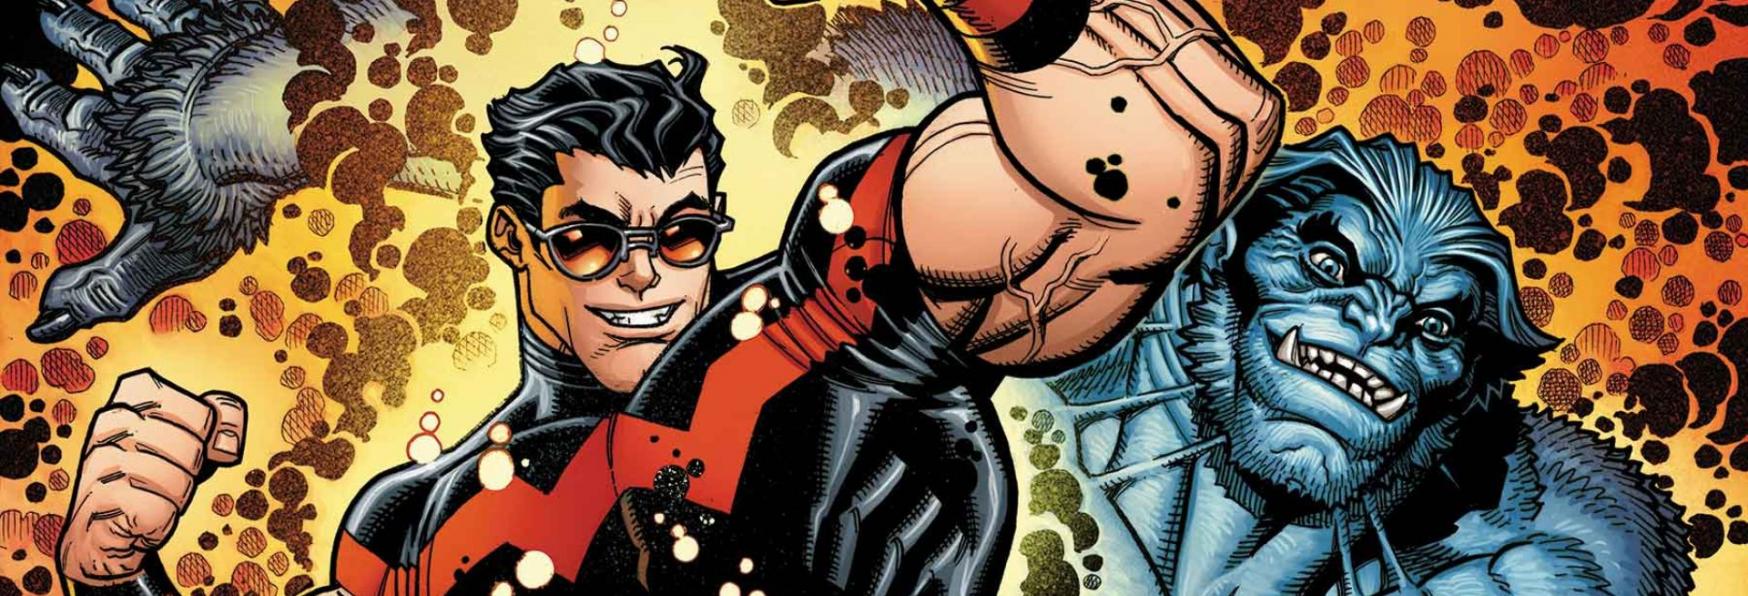 Wonder Man: Stephen Broussard svela nuovi Dettagli sull'inedita Serie TV targata Disney+